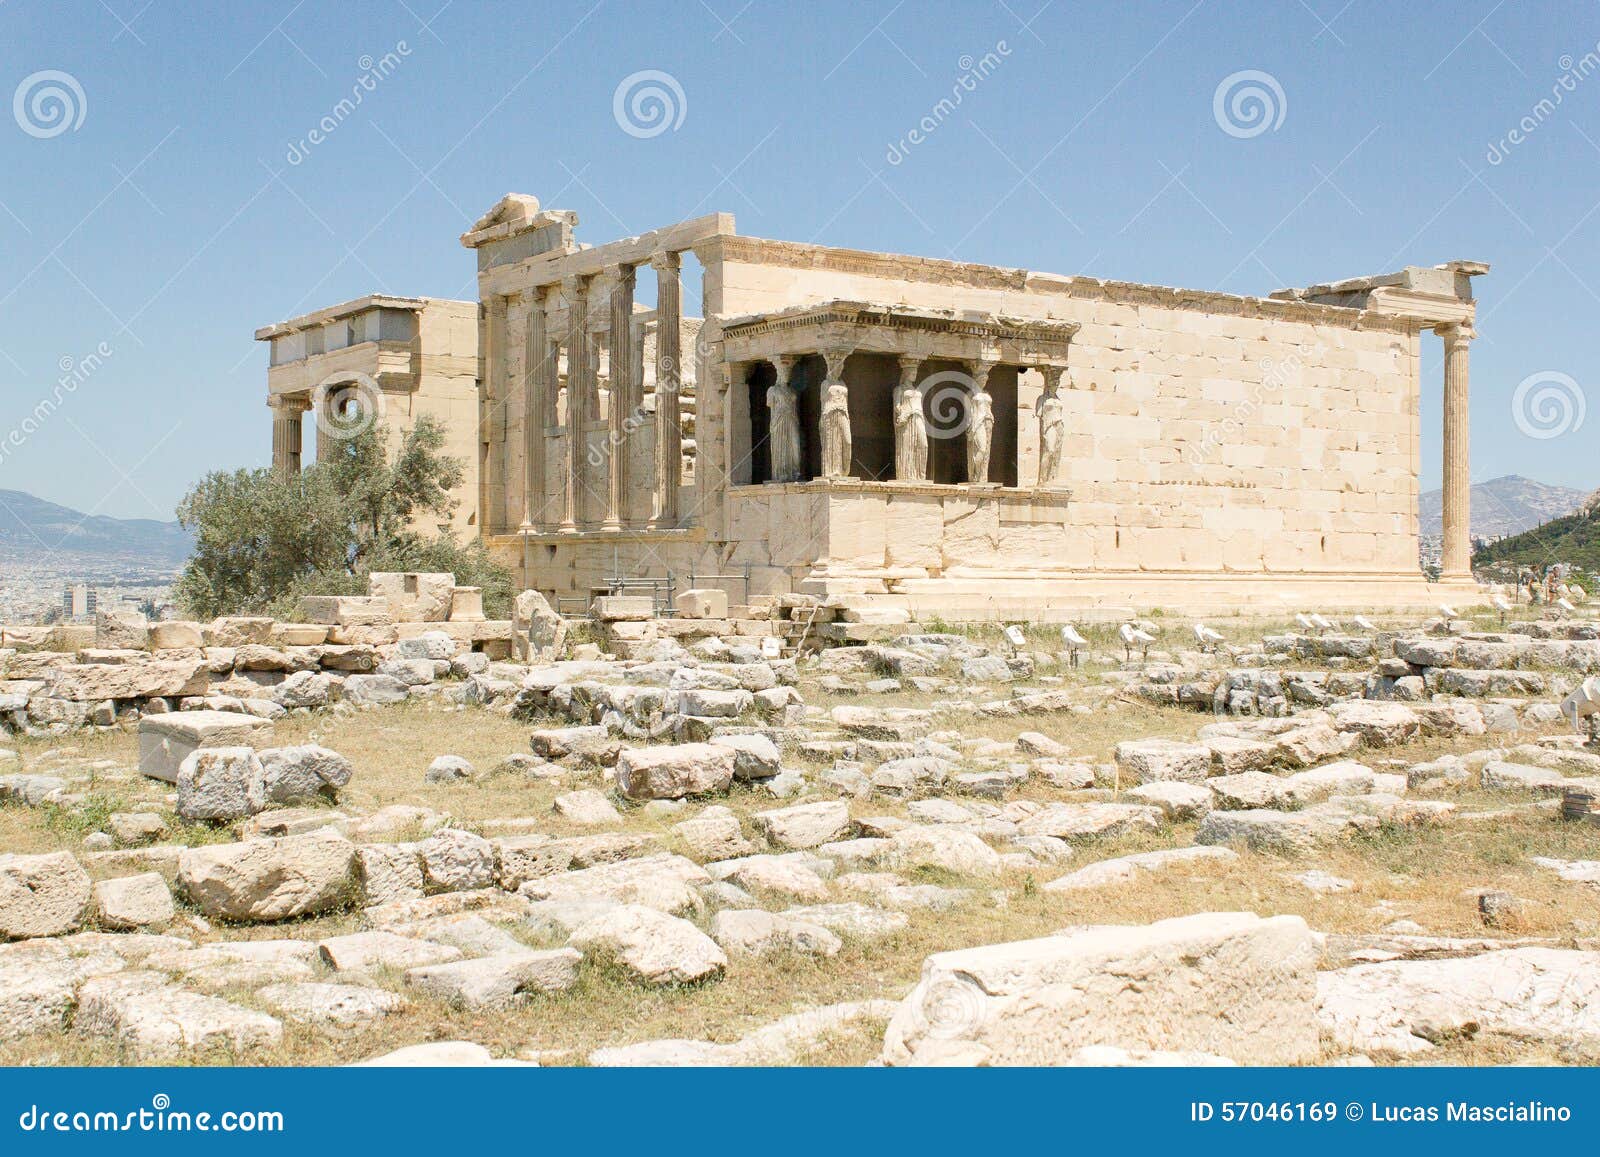 atenas greece acropolis